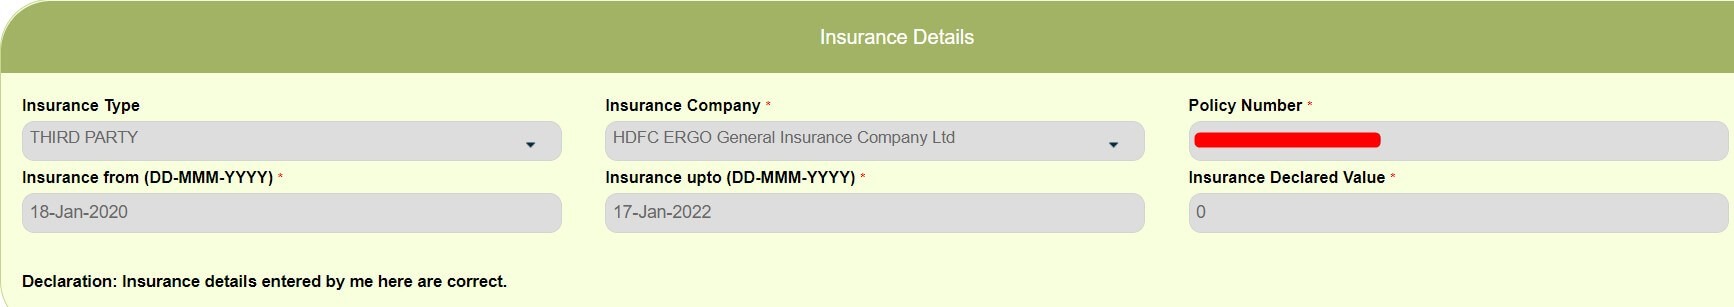 insurance details